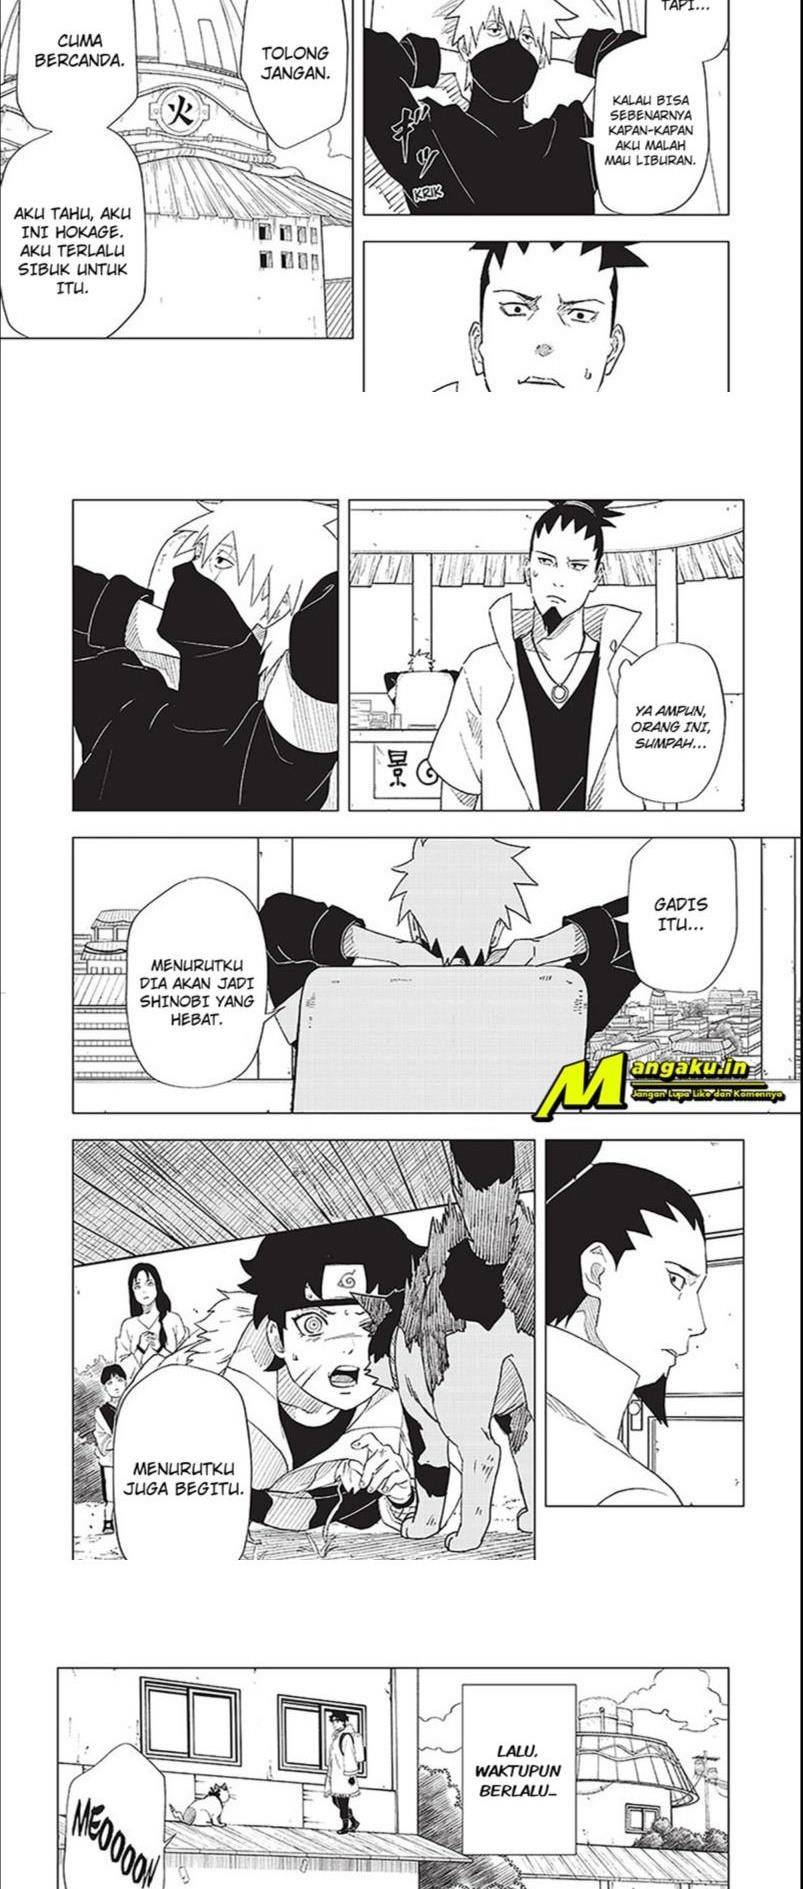 Naruto: Konoha’s Story—The Steam Ninja Scrolls Chapter 1.2